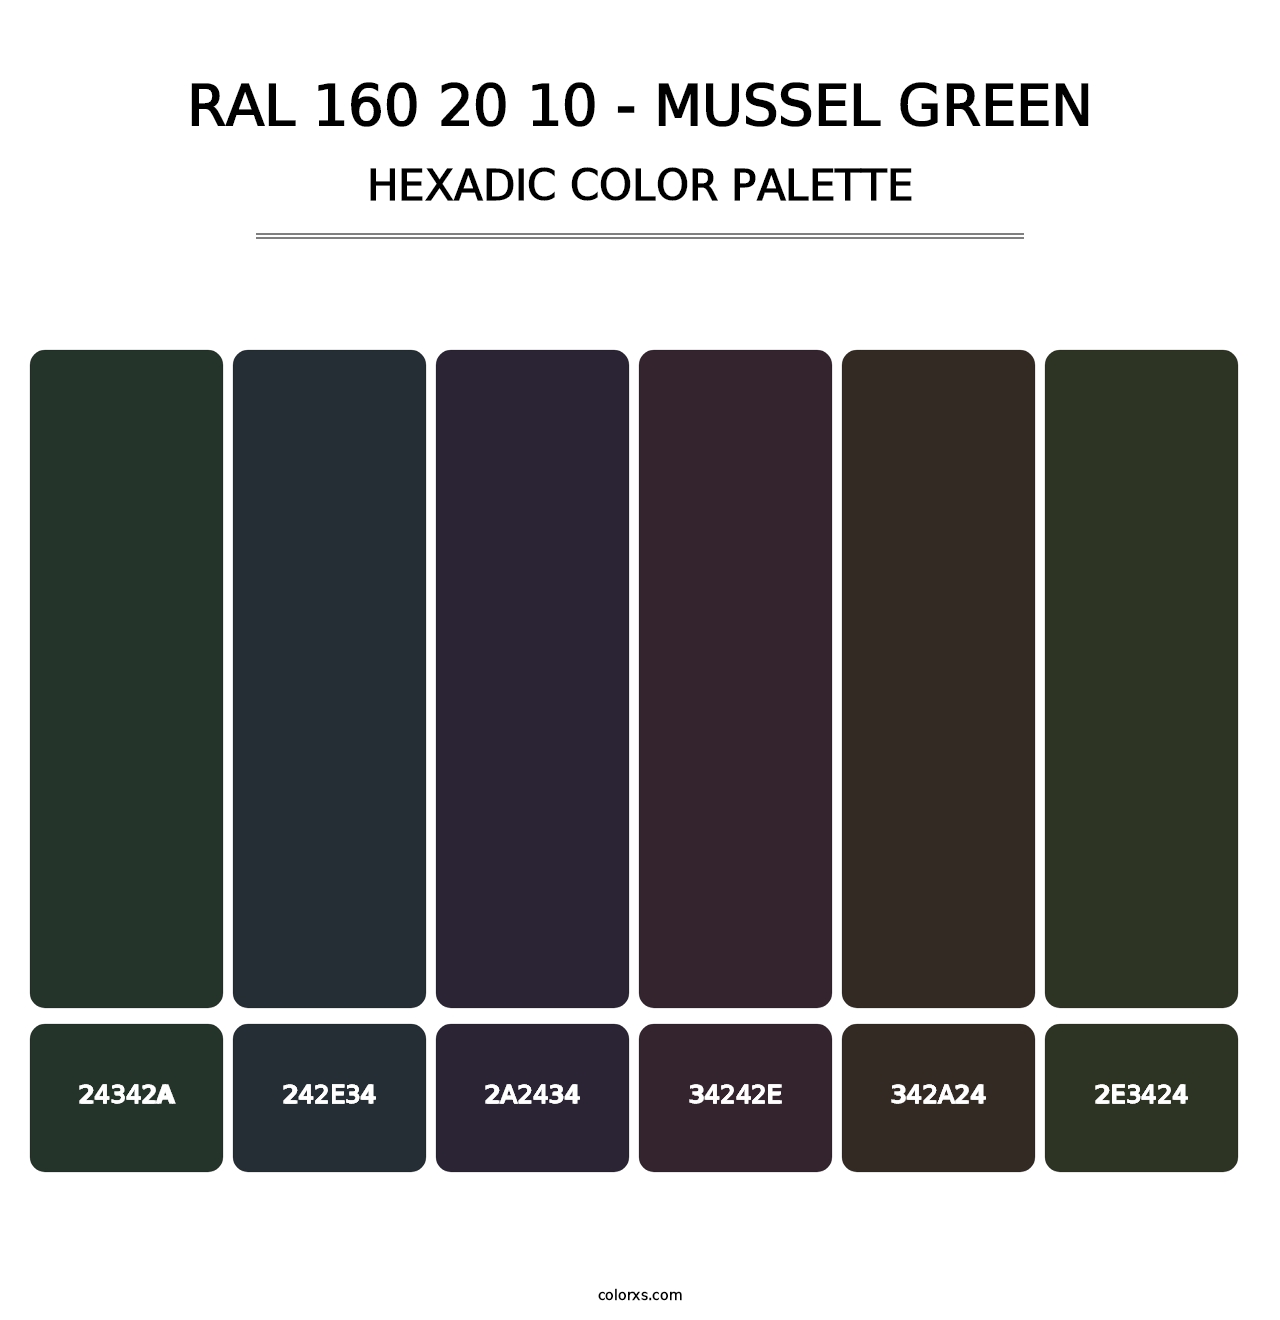 RAL 160 20 10 - Mussel Green - Hexadic Color Palette